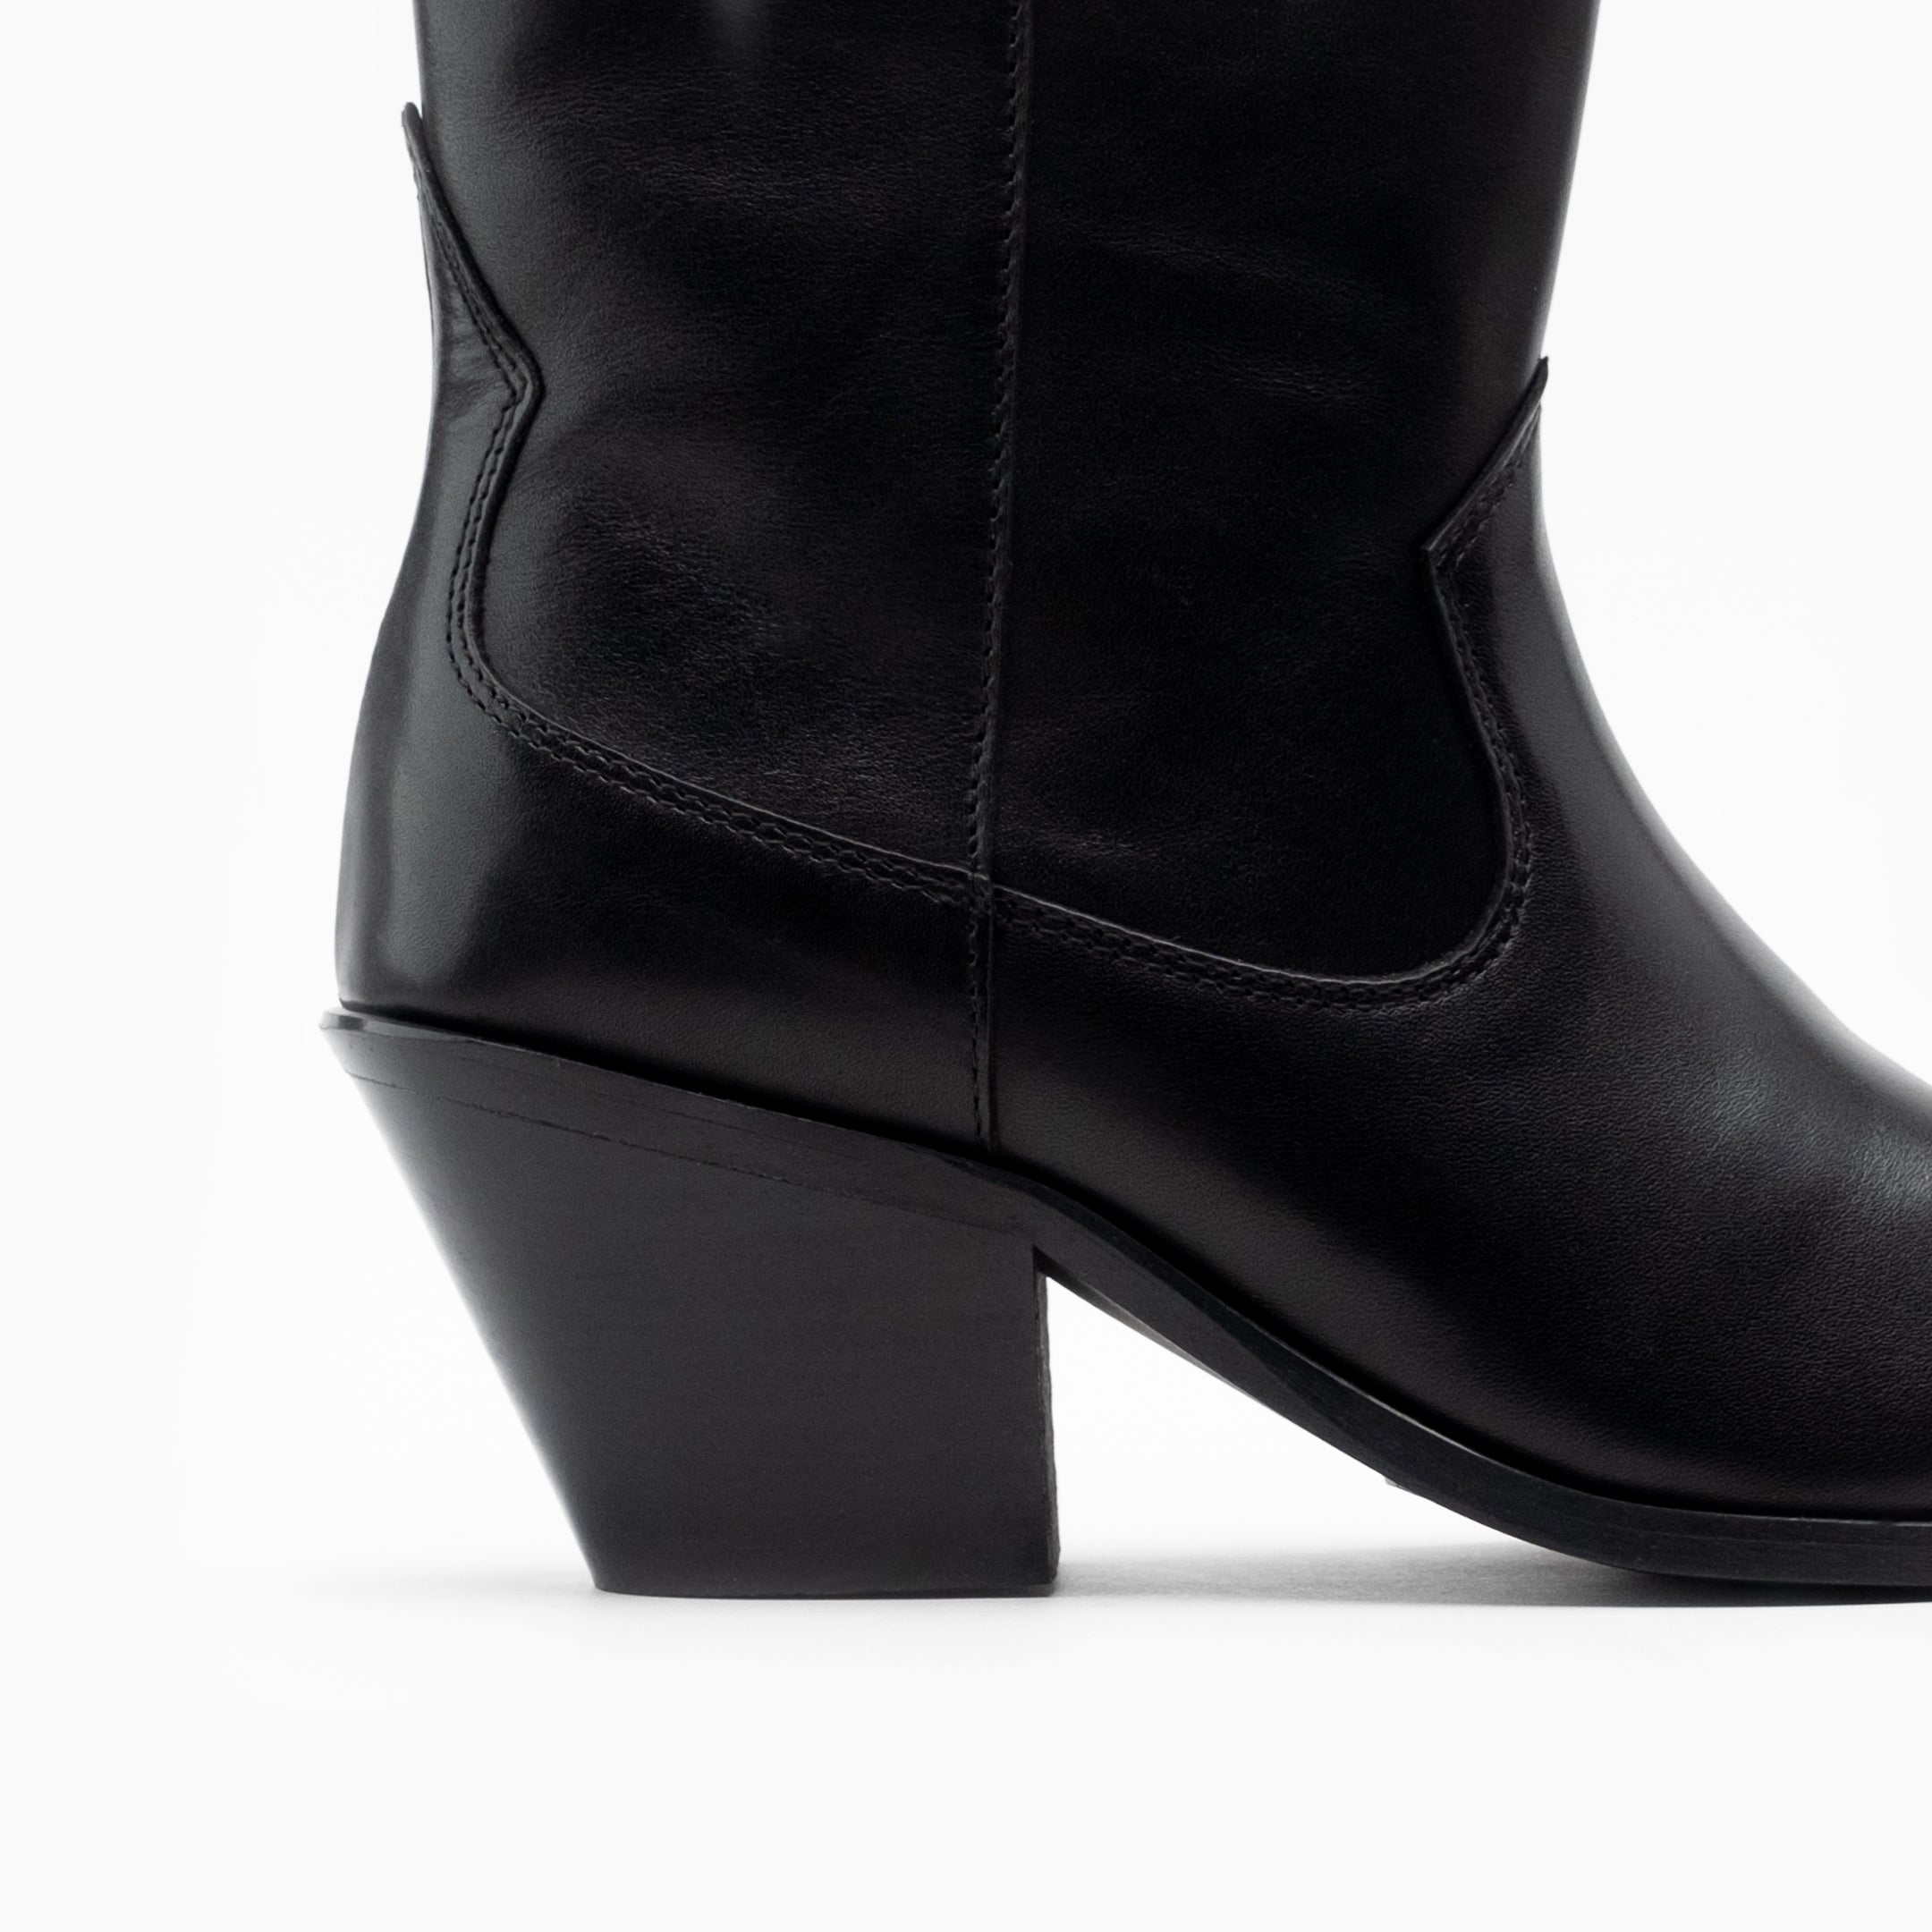 Walk London Womens Cora Western Boot in Black Leather